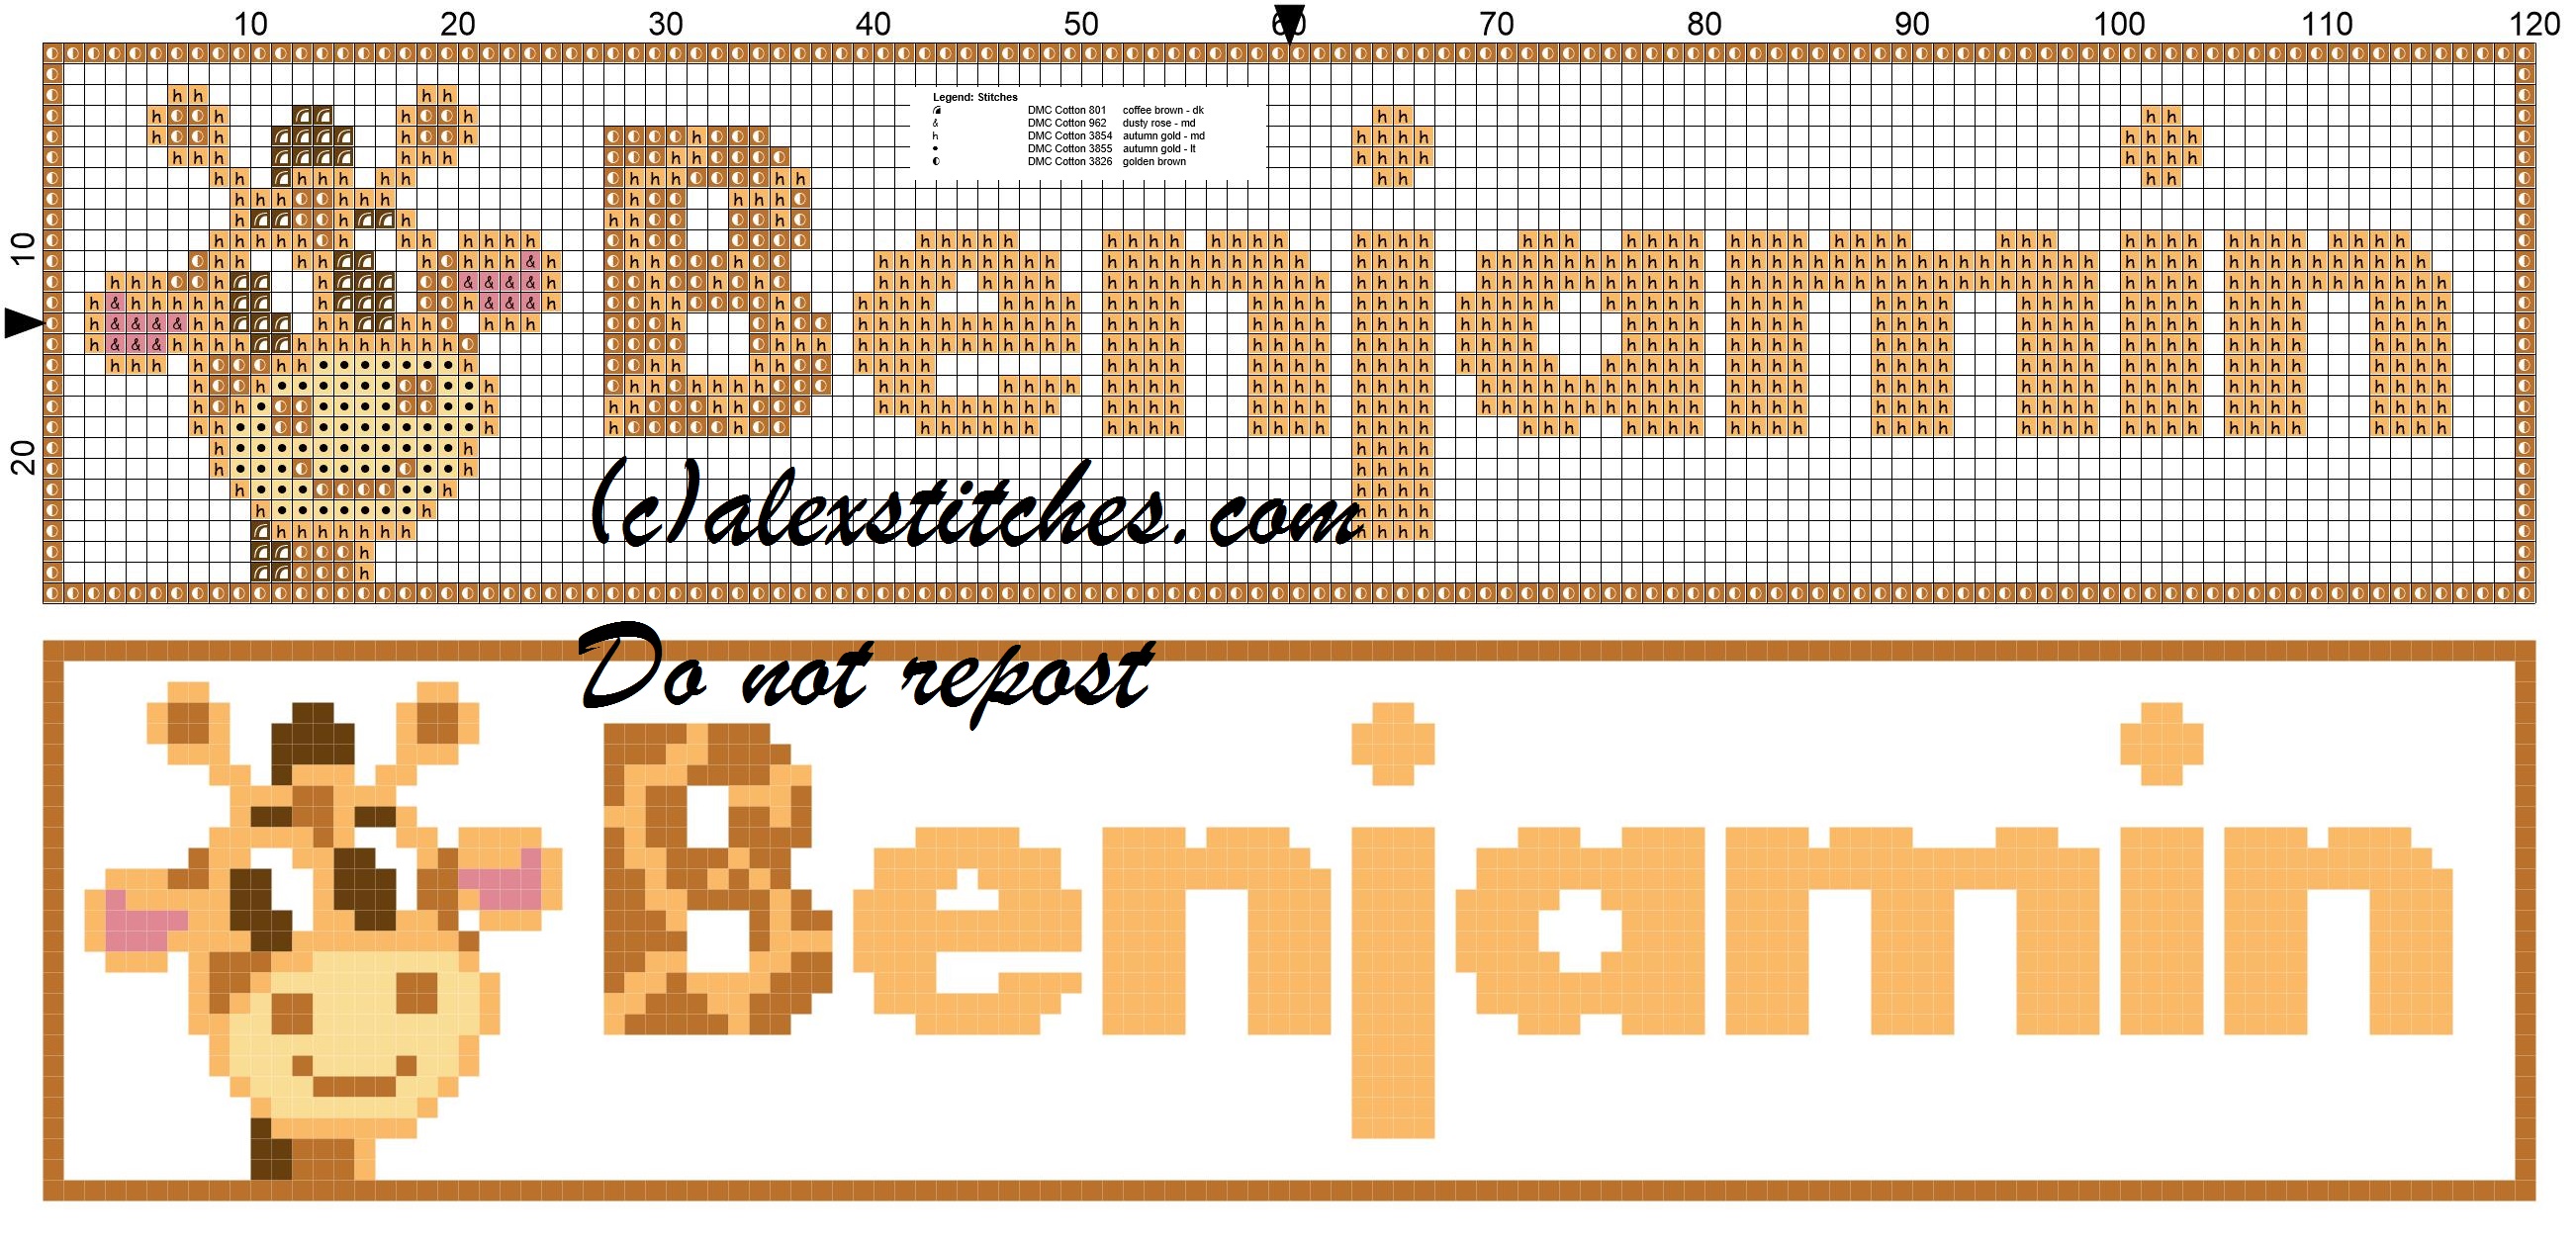 Benjamin name with giraffe cross stitch pattern